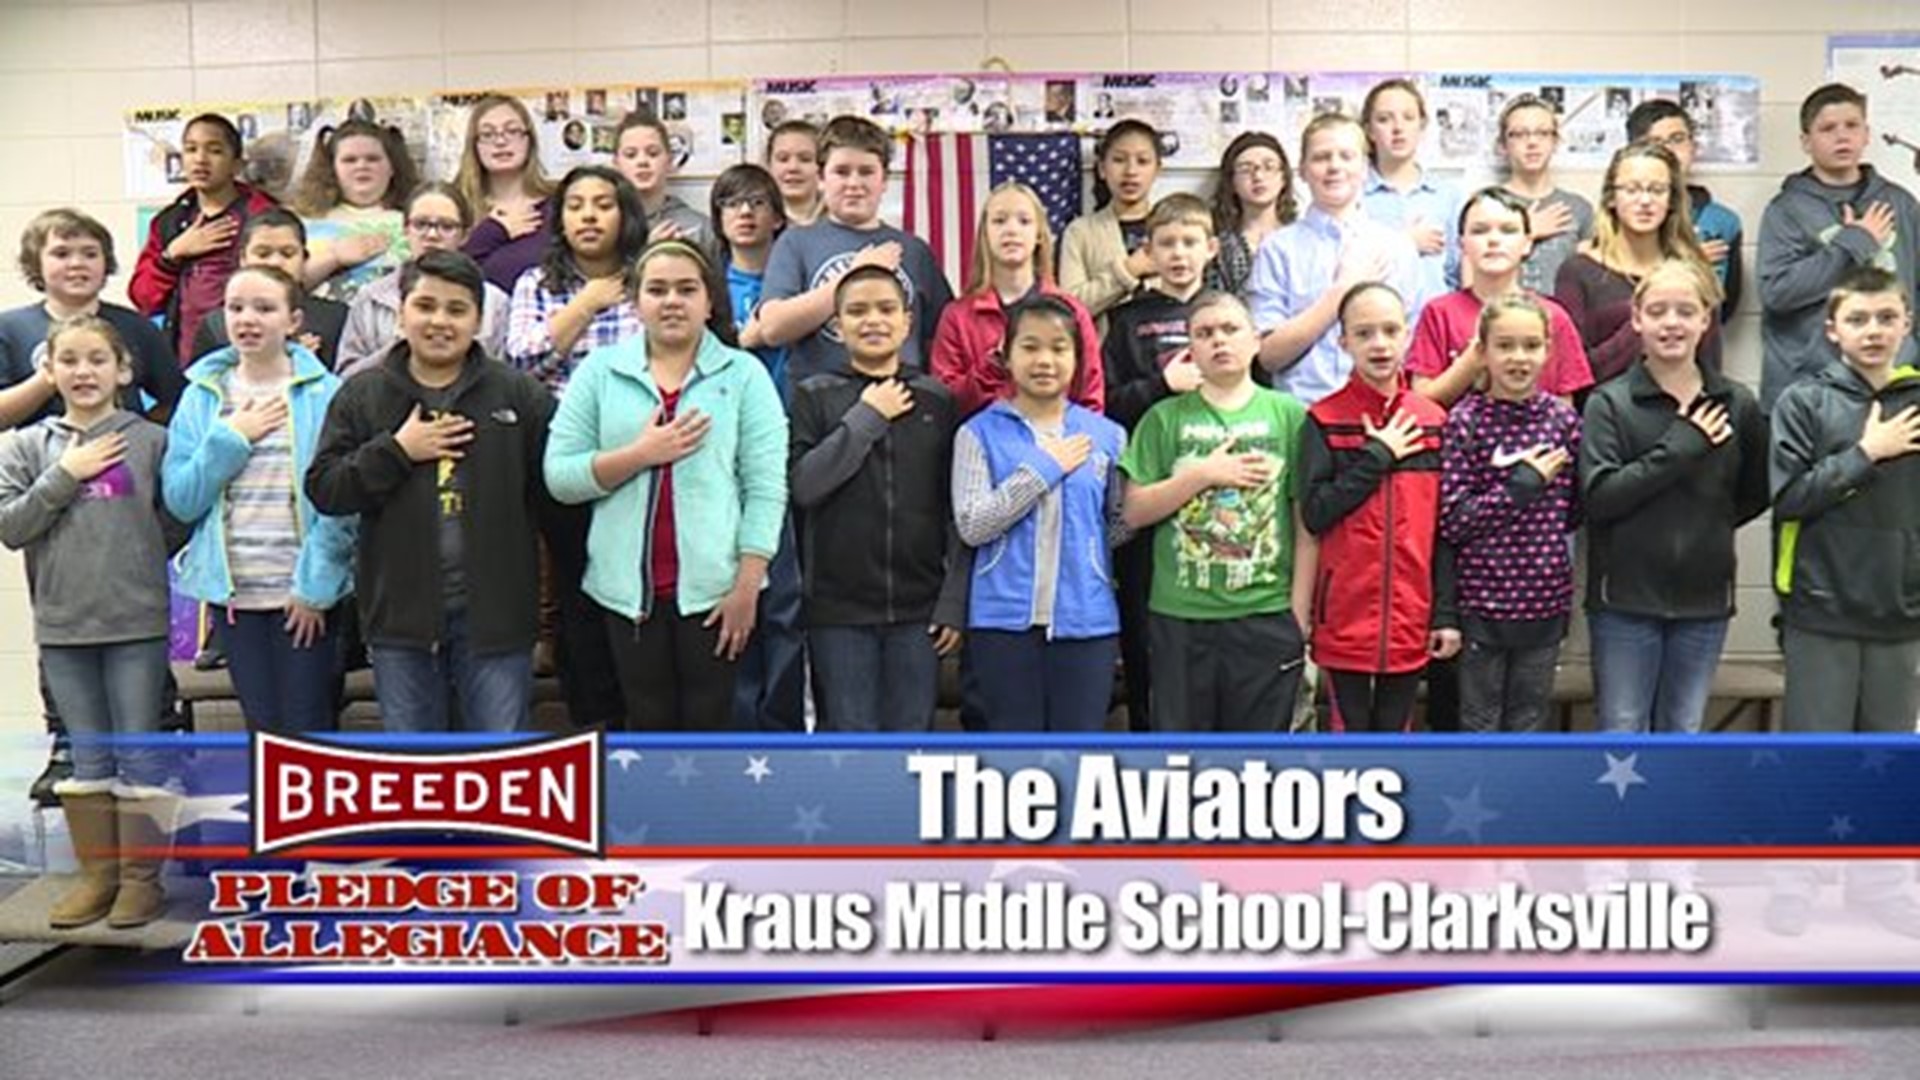 Kraus Middle School, Clarksville - The Aviators